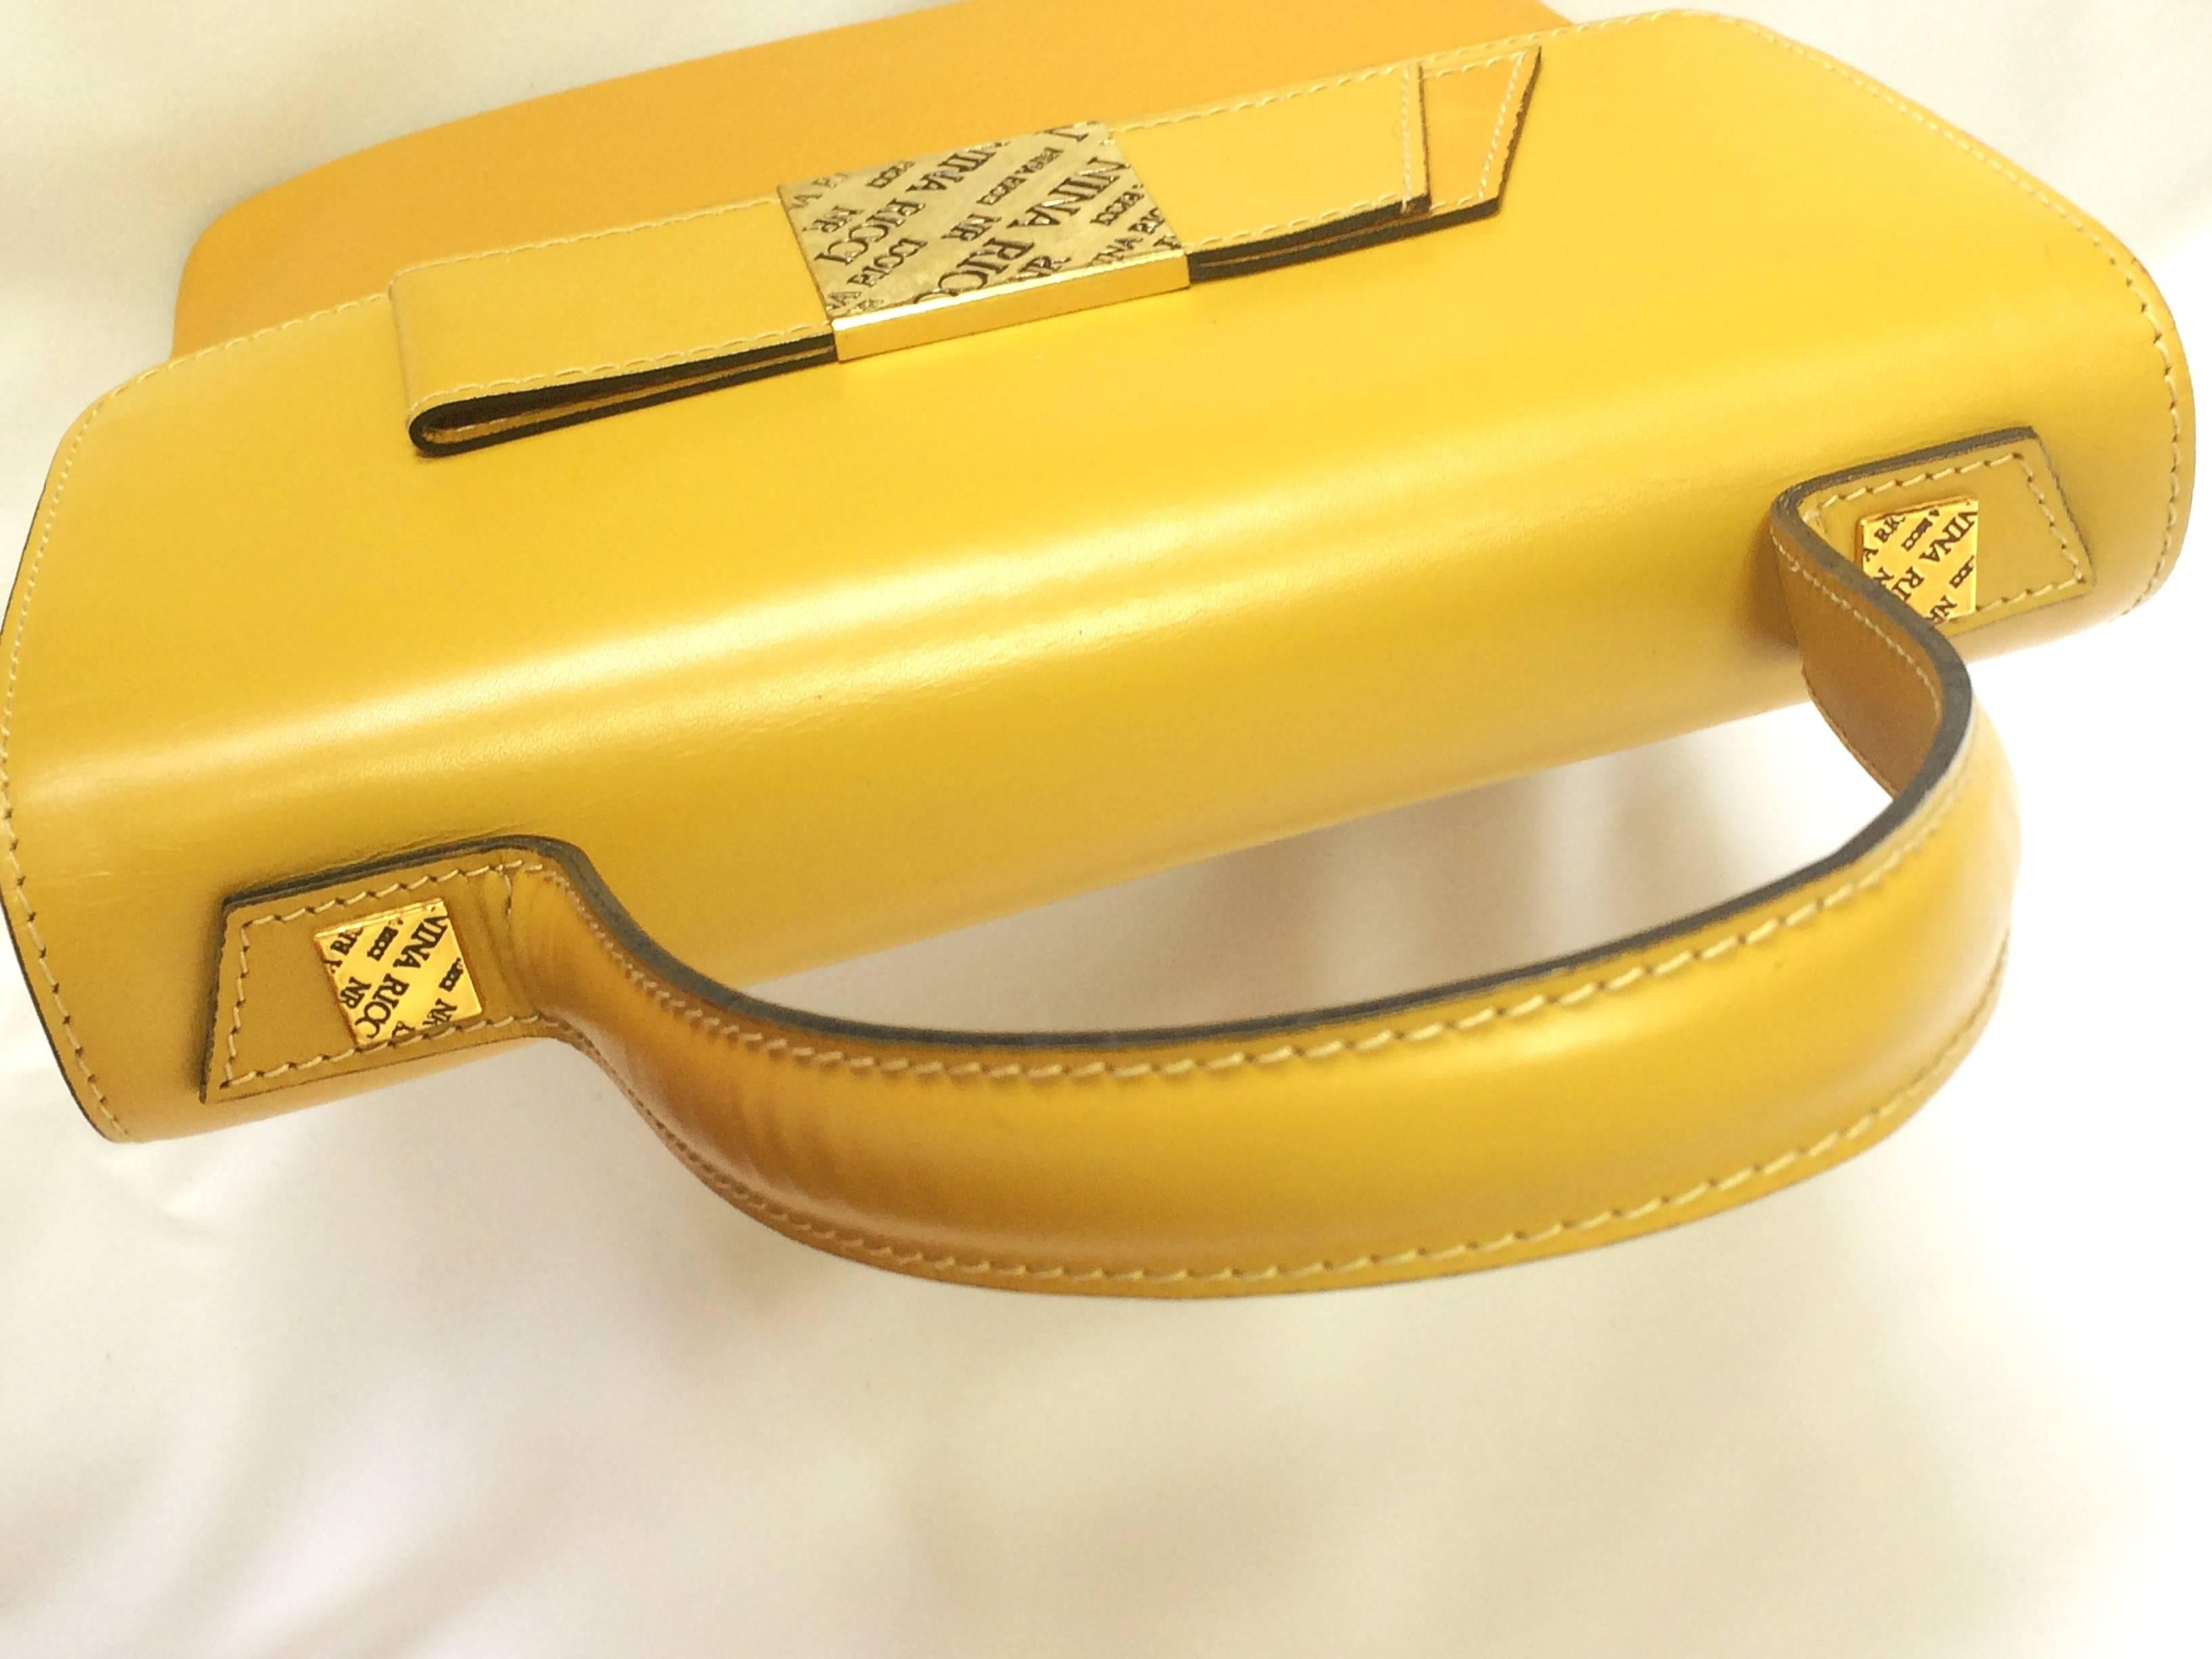 MINT. Vintage Nina Ricci yellow leather handbag purse with shoulder strap. 1